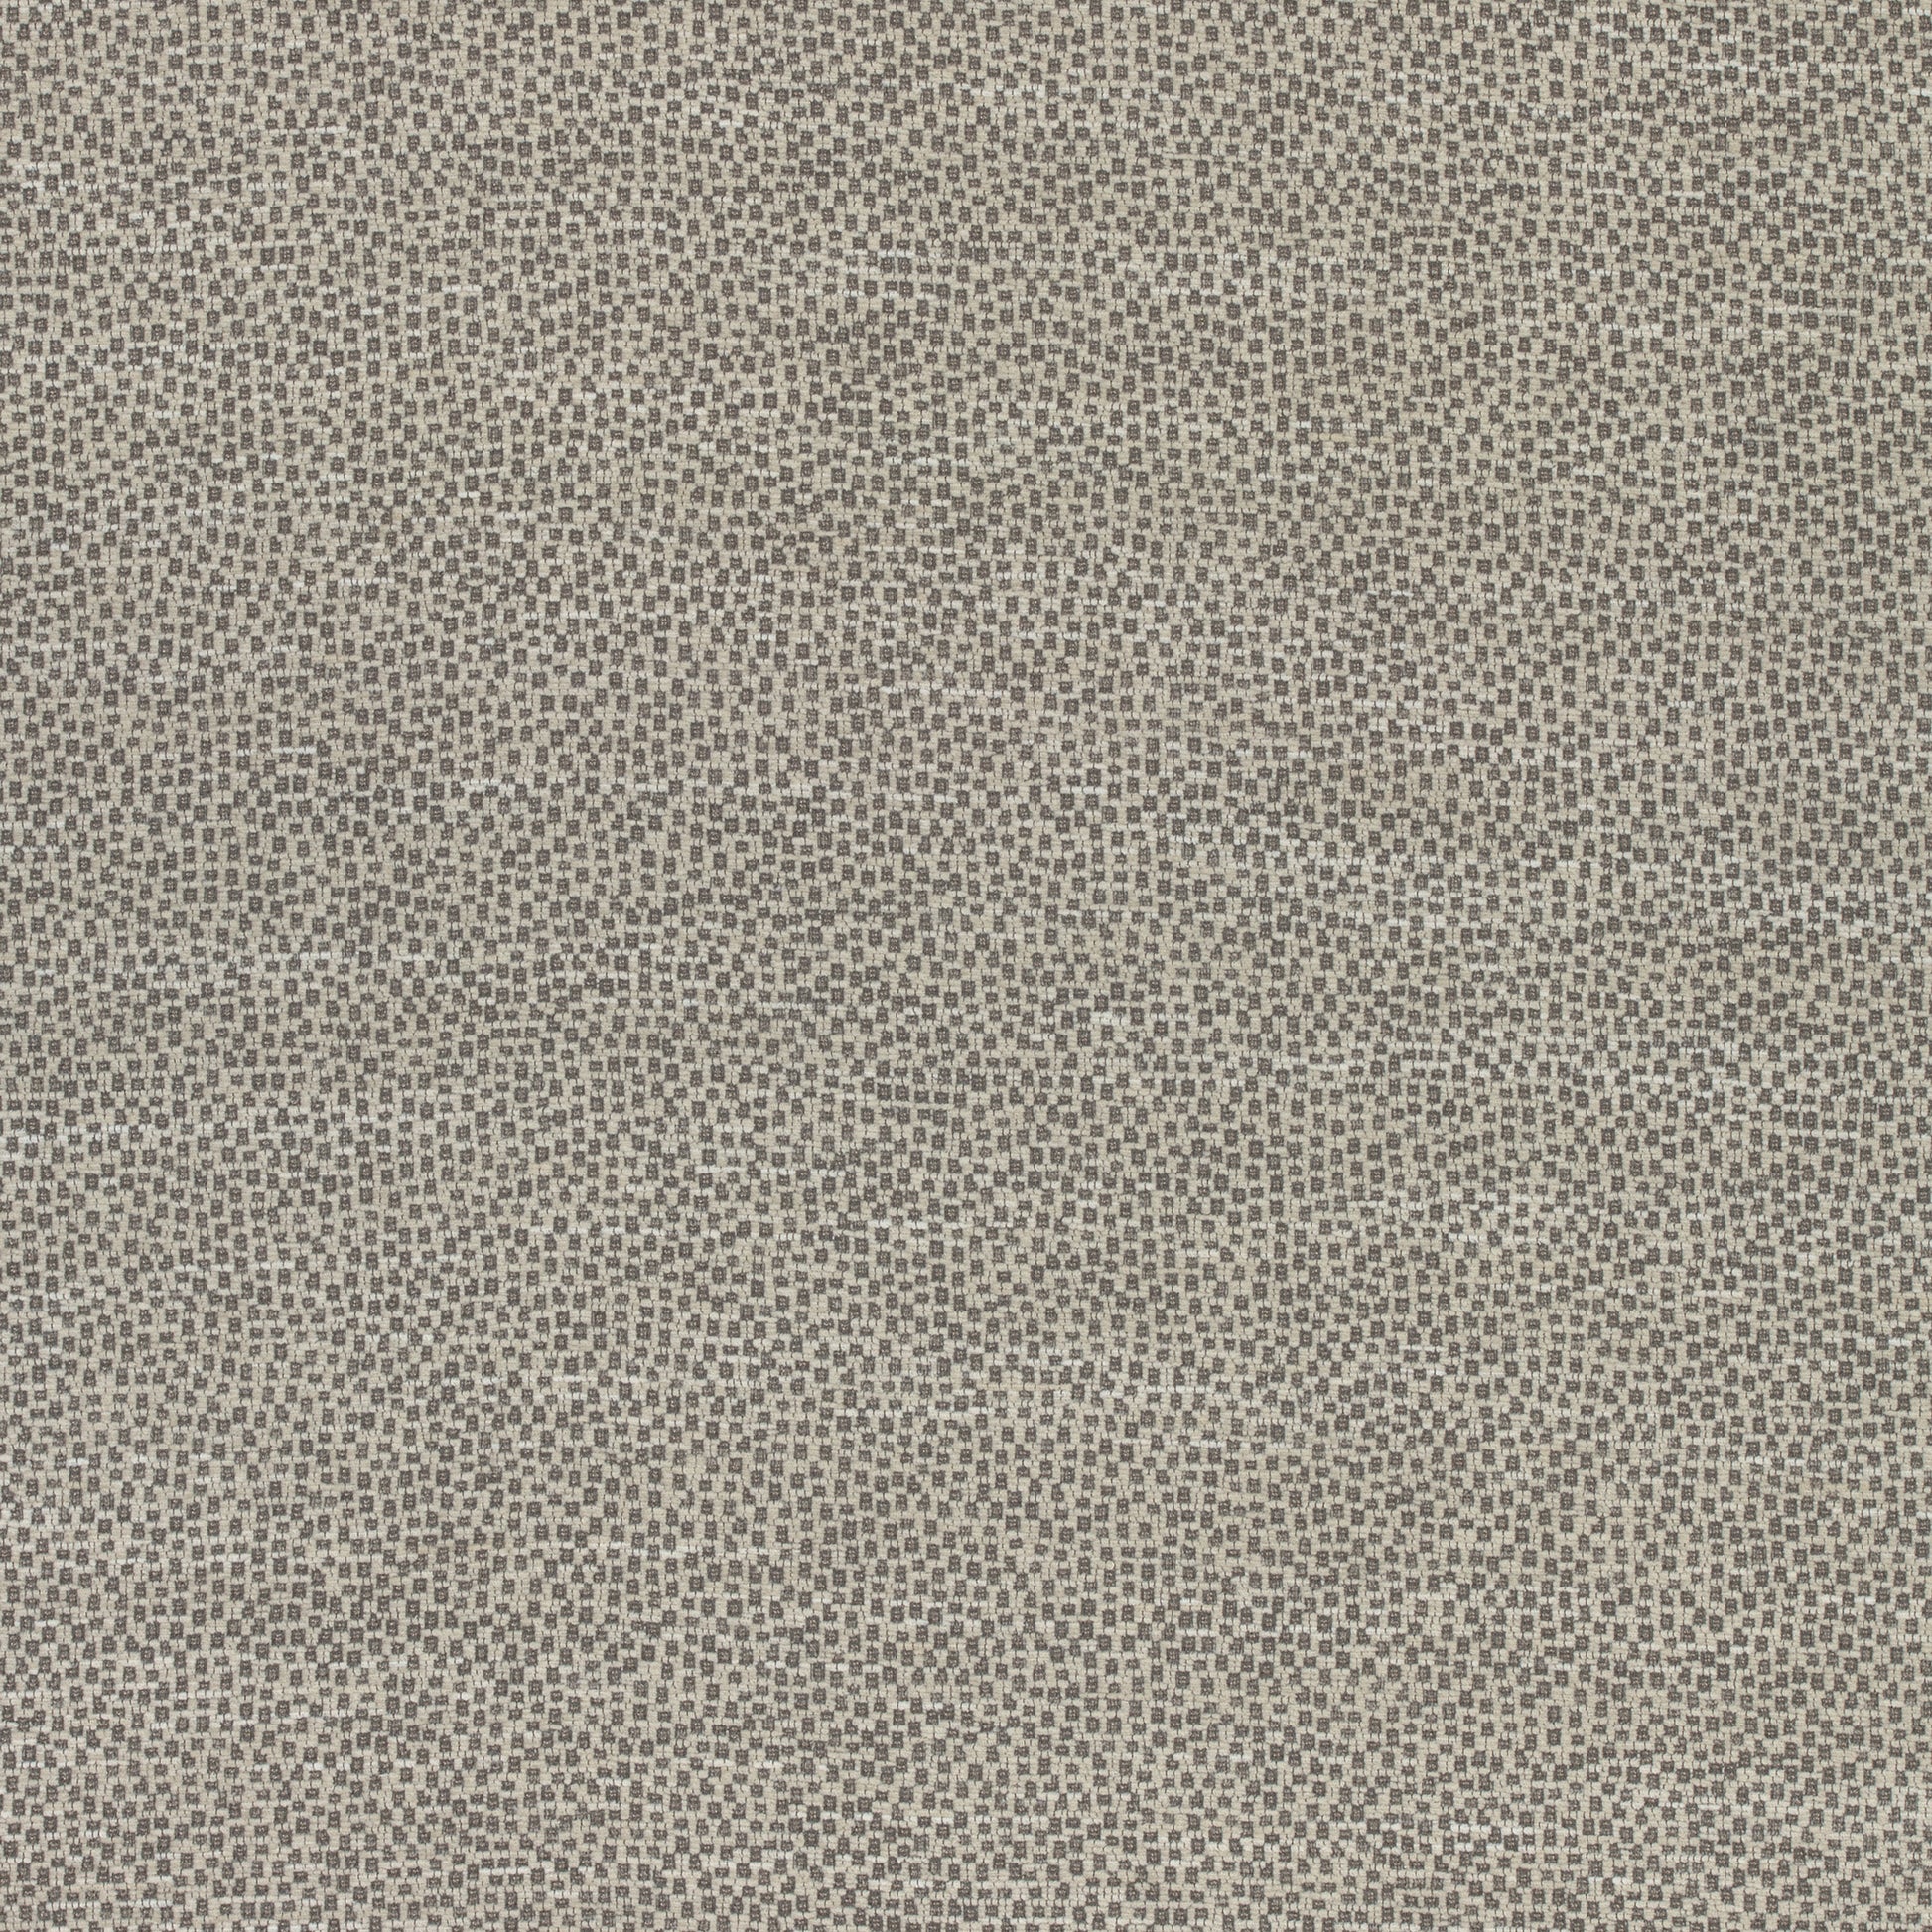 Purchase Thibaut Fabric Item# W74077 pattern name Nala color Grey